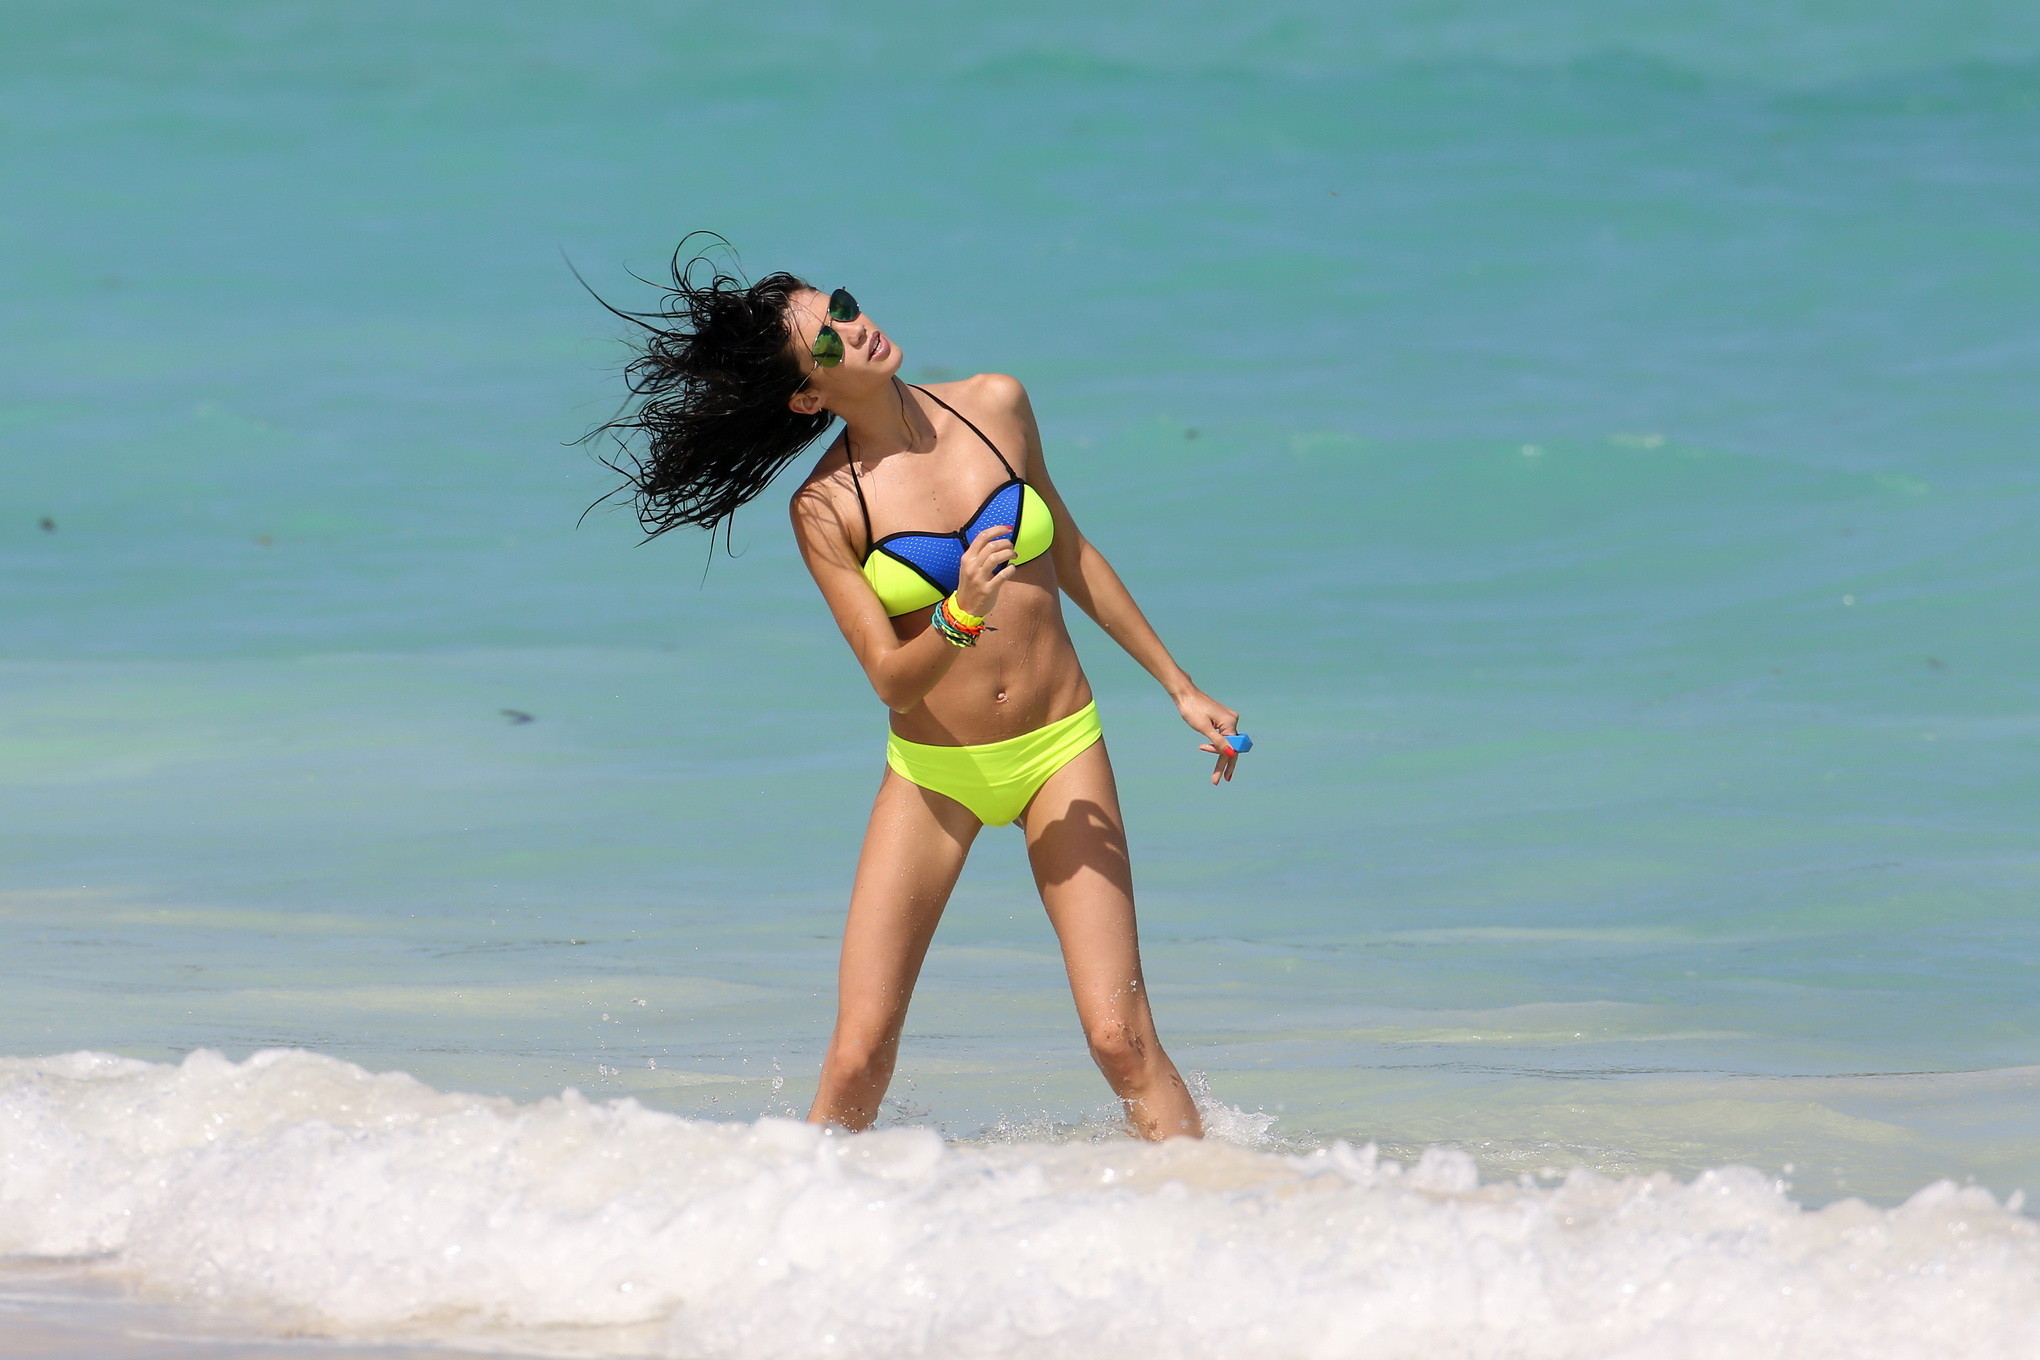 Sara Sampaio shooting in skimpy blue and yellow bikini at some Caribbean beach #75180528